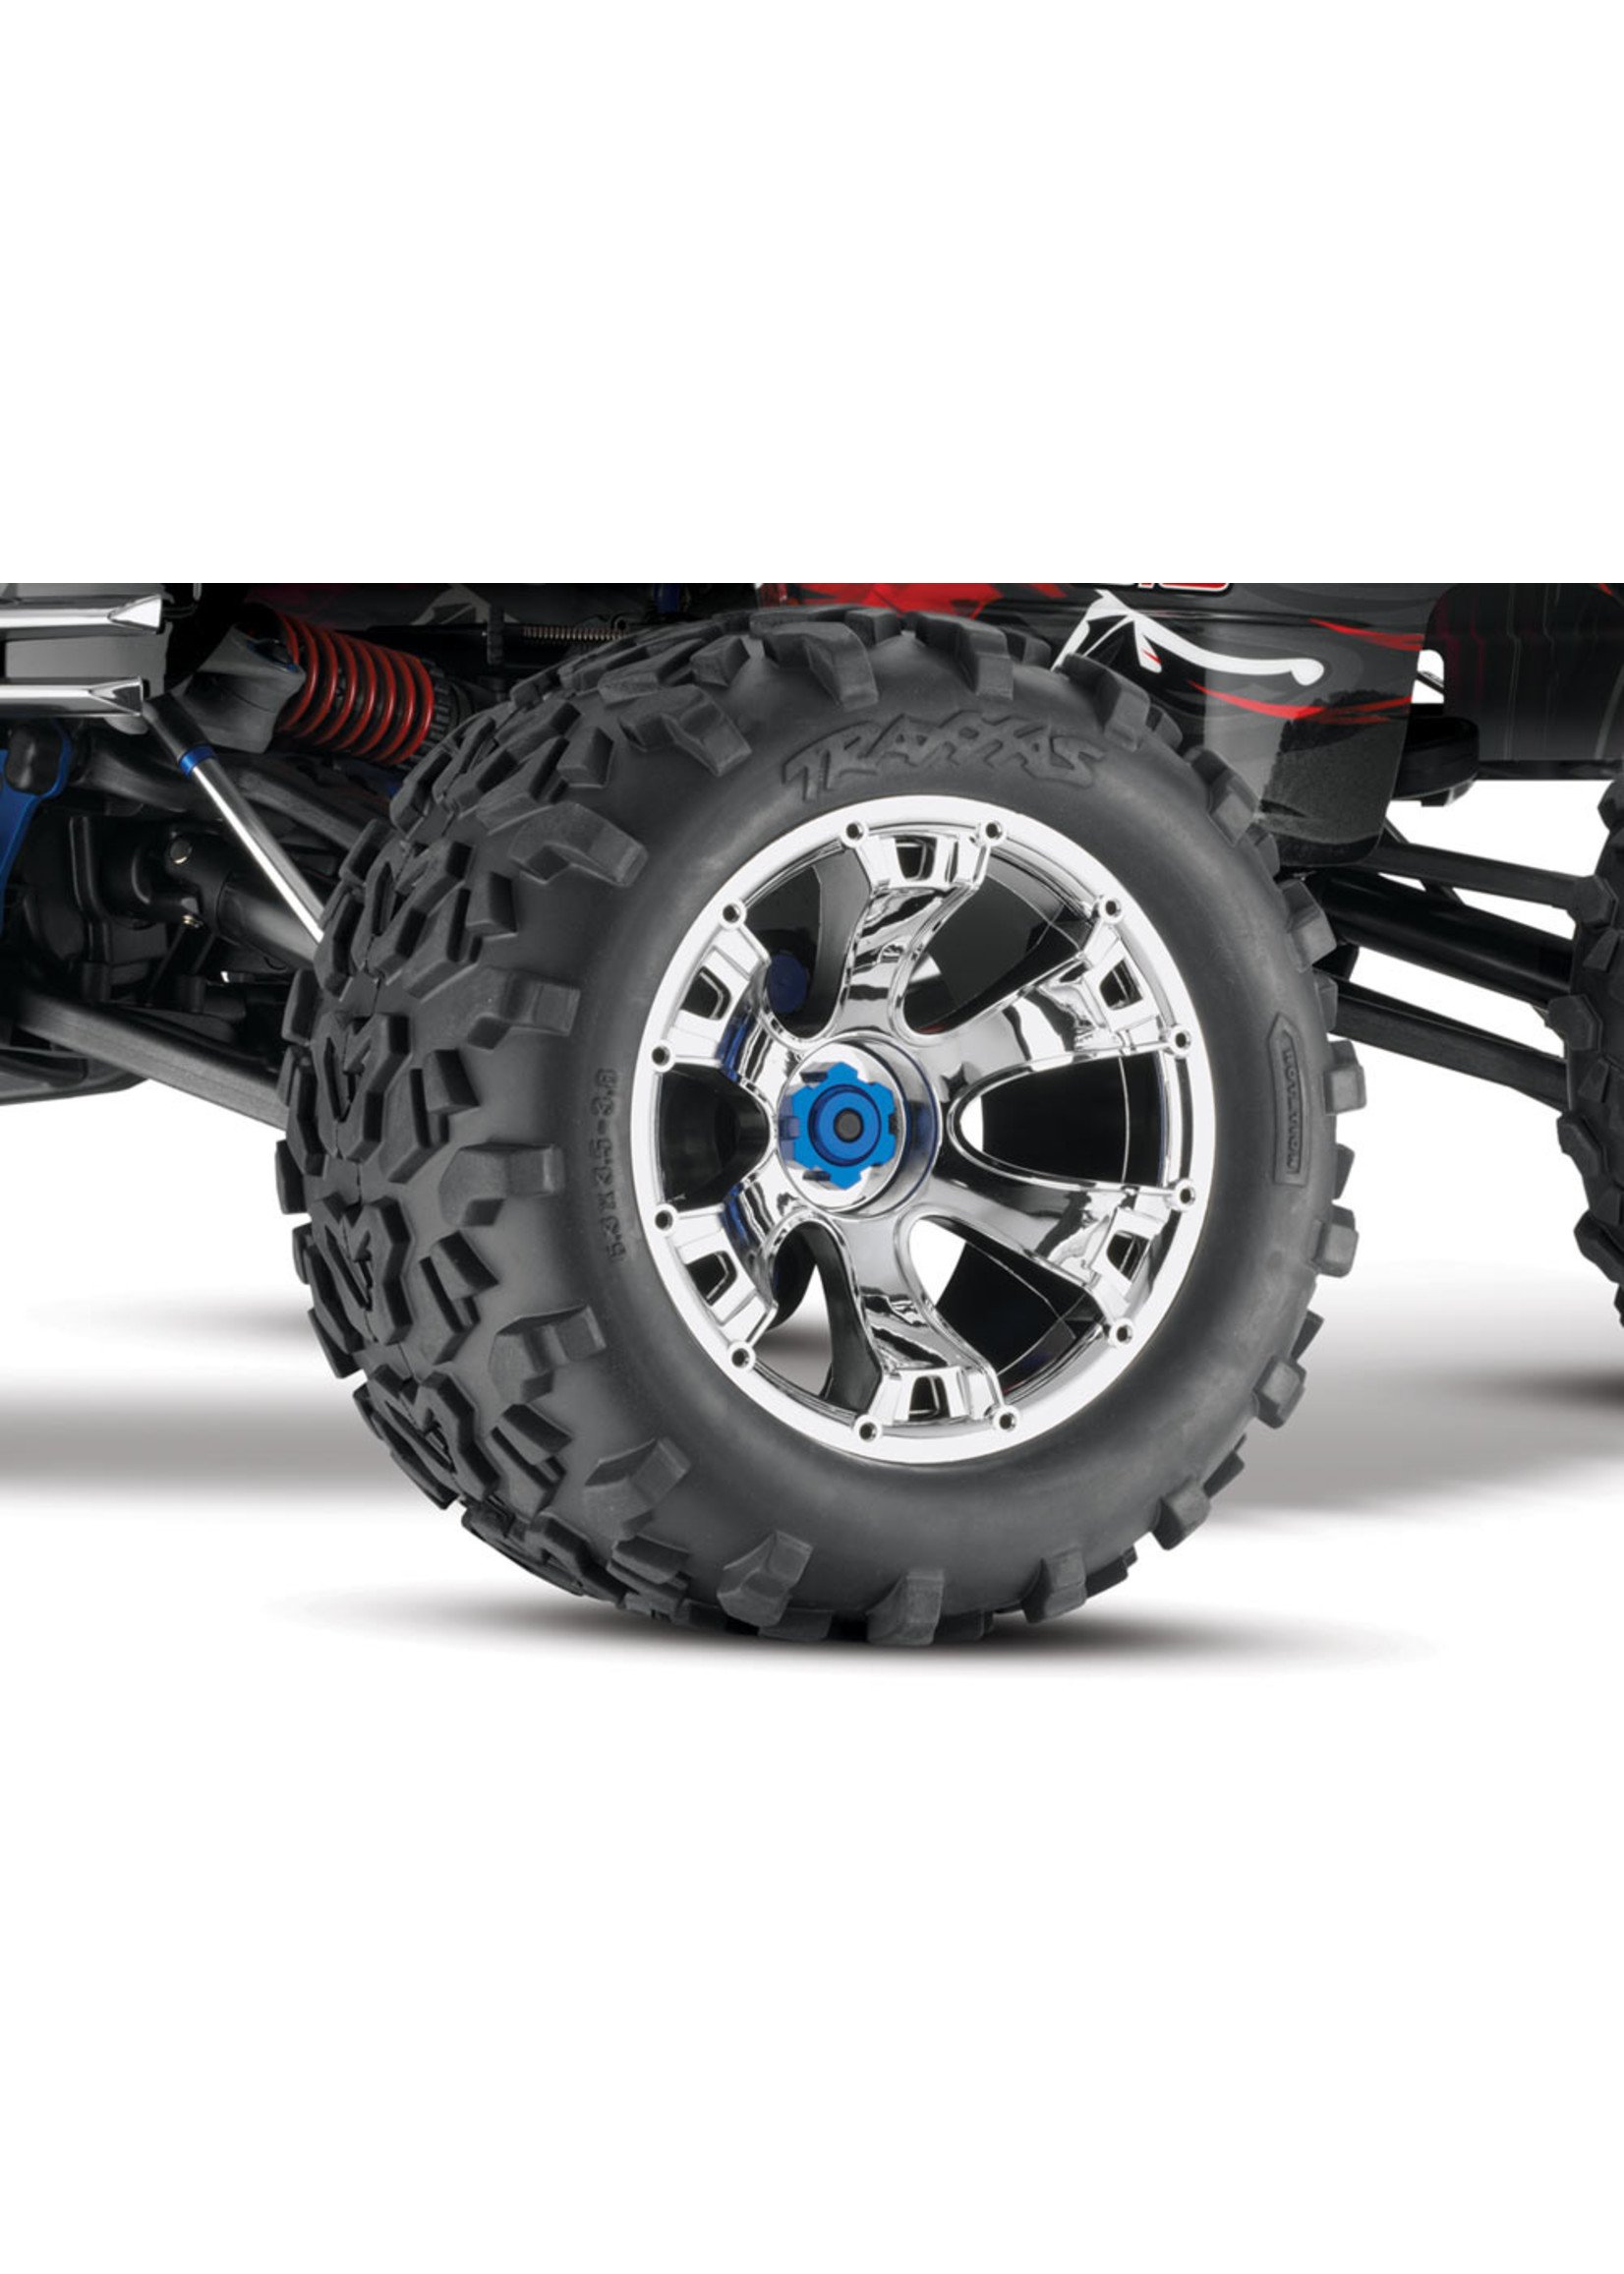 Traxxas 1/10 Revo 3.3 4WD Nitro Monster Truck - Blue